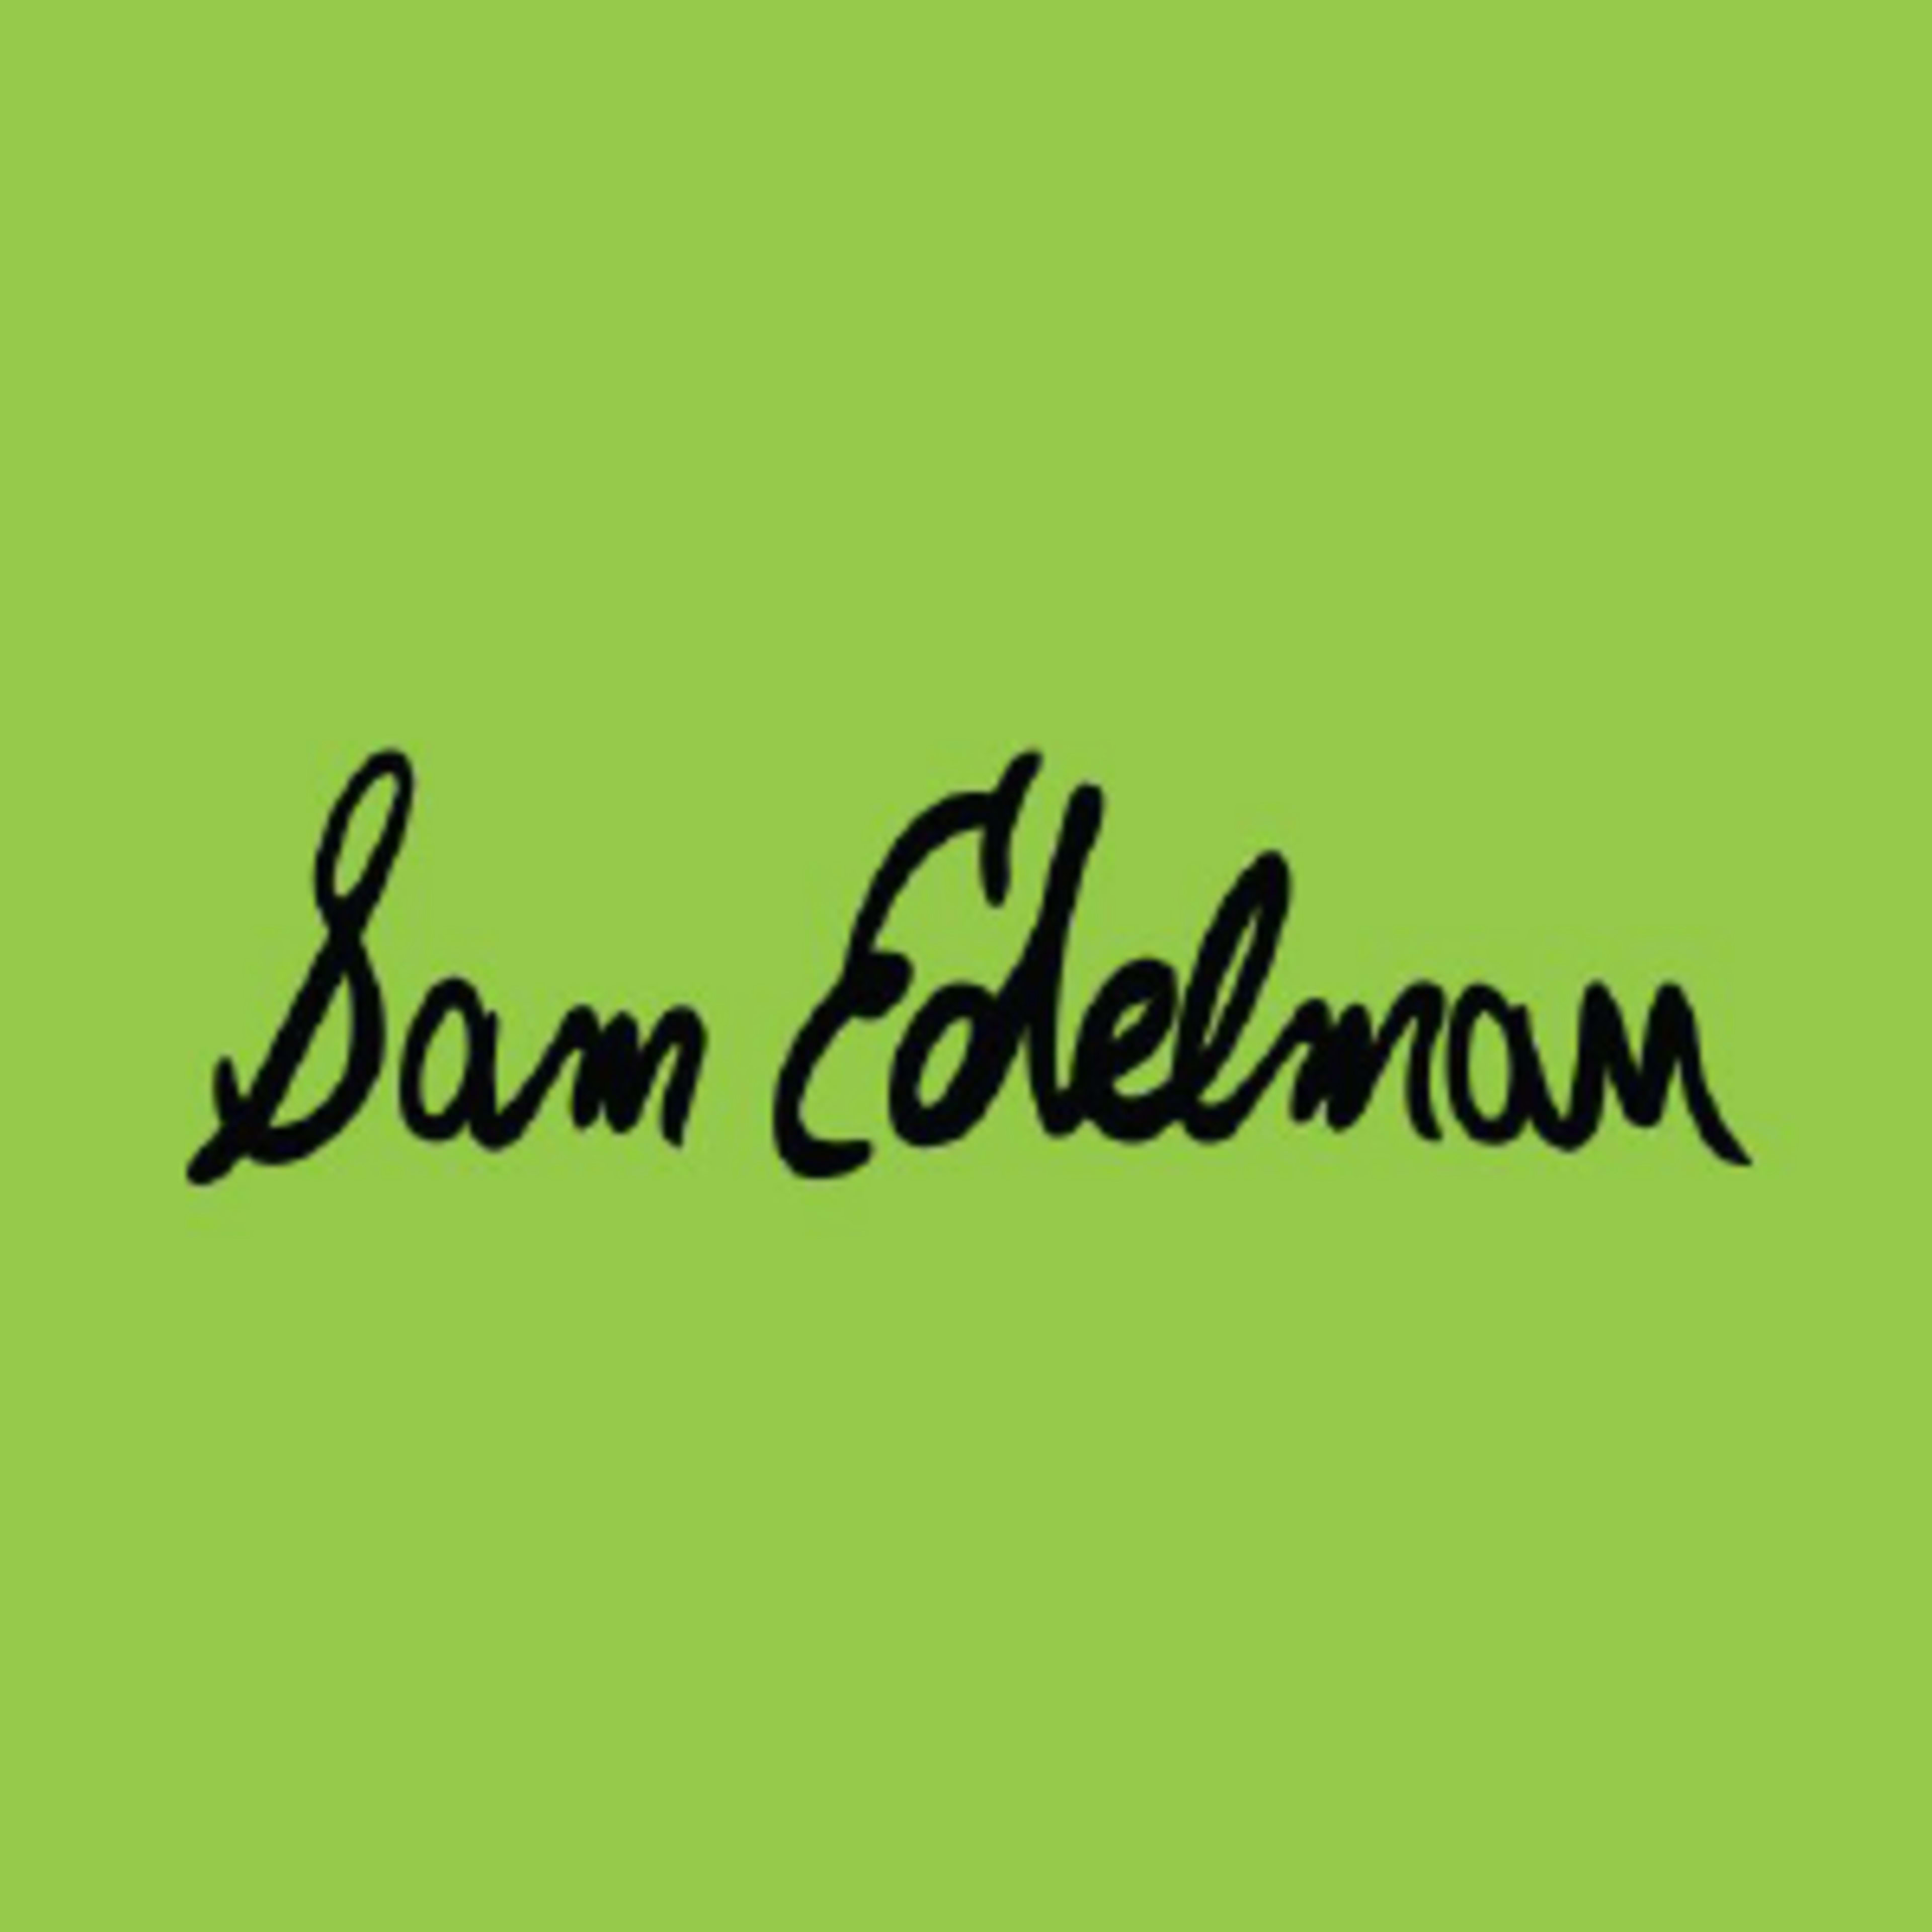 Sam Edelman Code